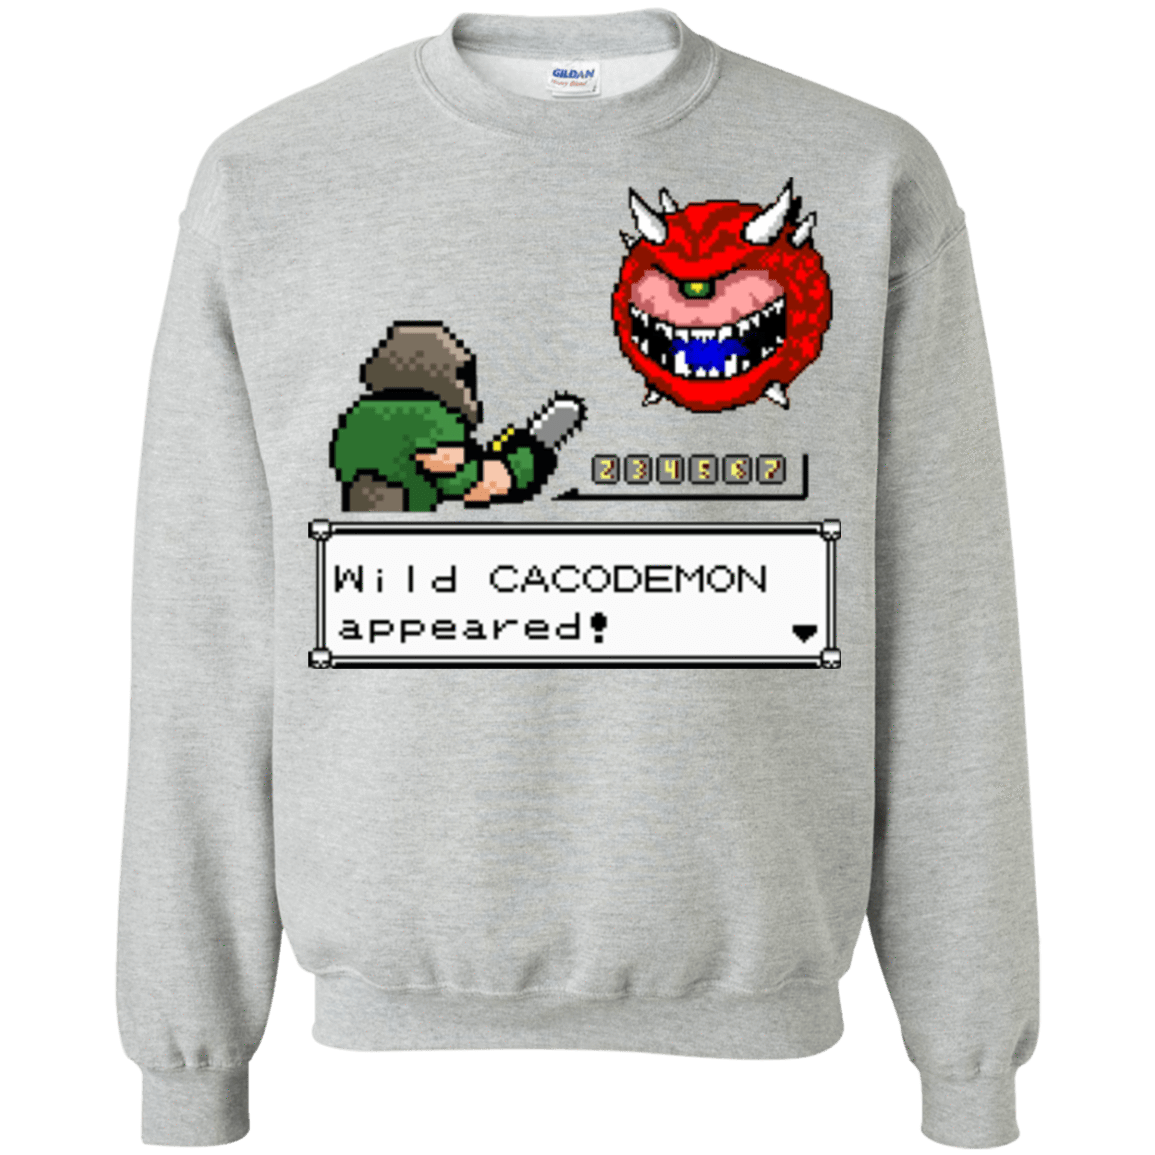 Sweatshirts Sport Grey / Small A Wild Cacodemon Crewneck Sweatshirt